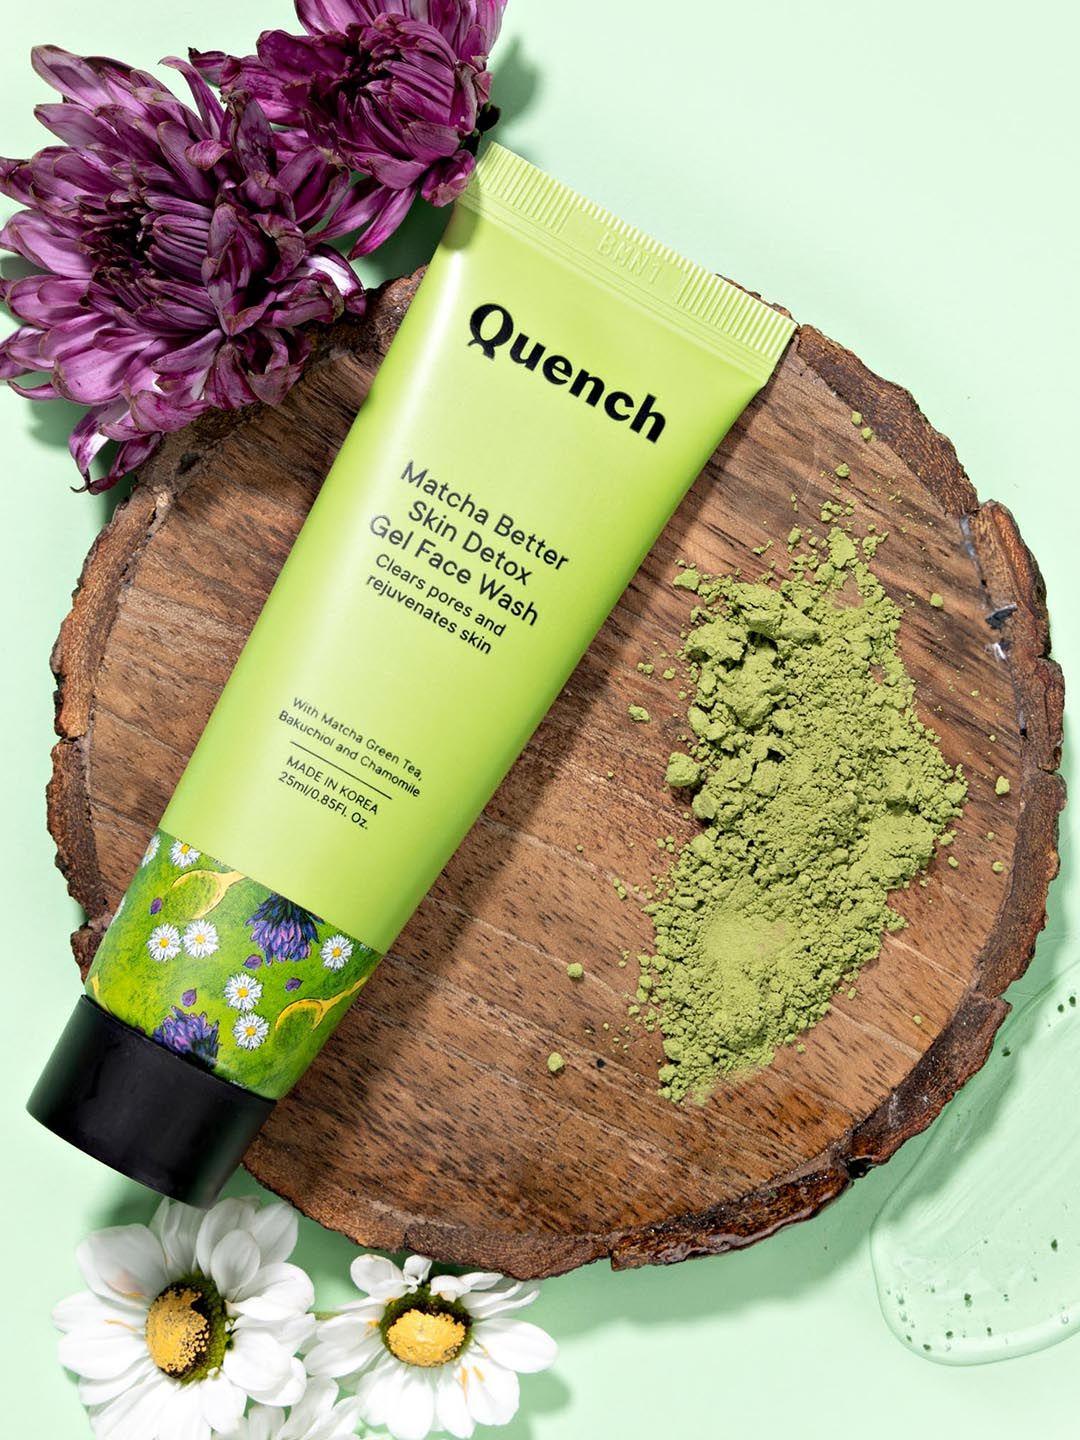 quench botanics matcha better skin detox gel face wash - 25 ml